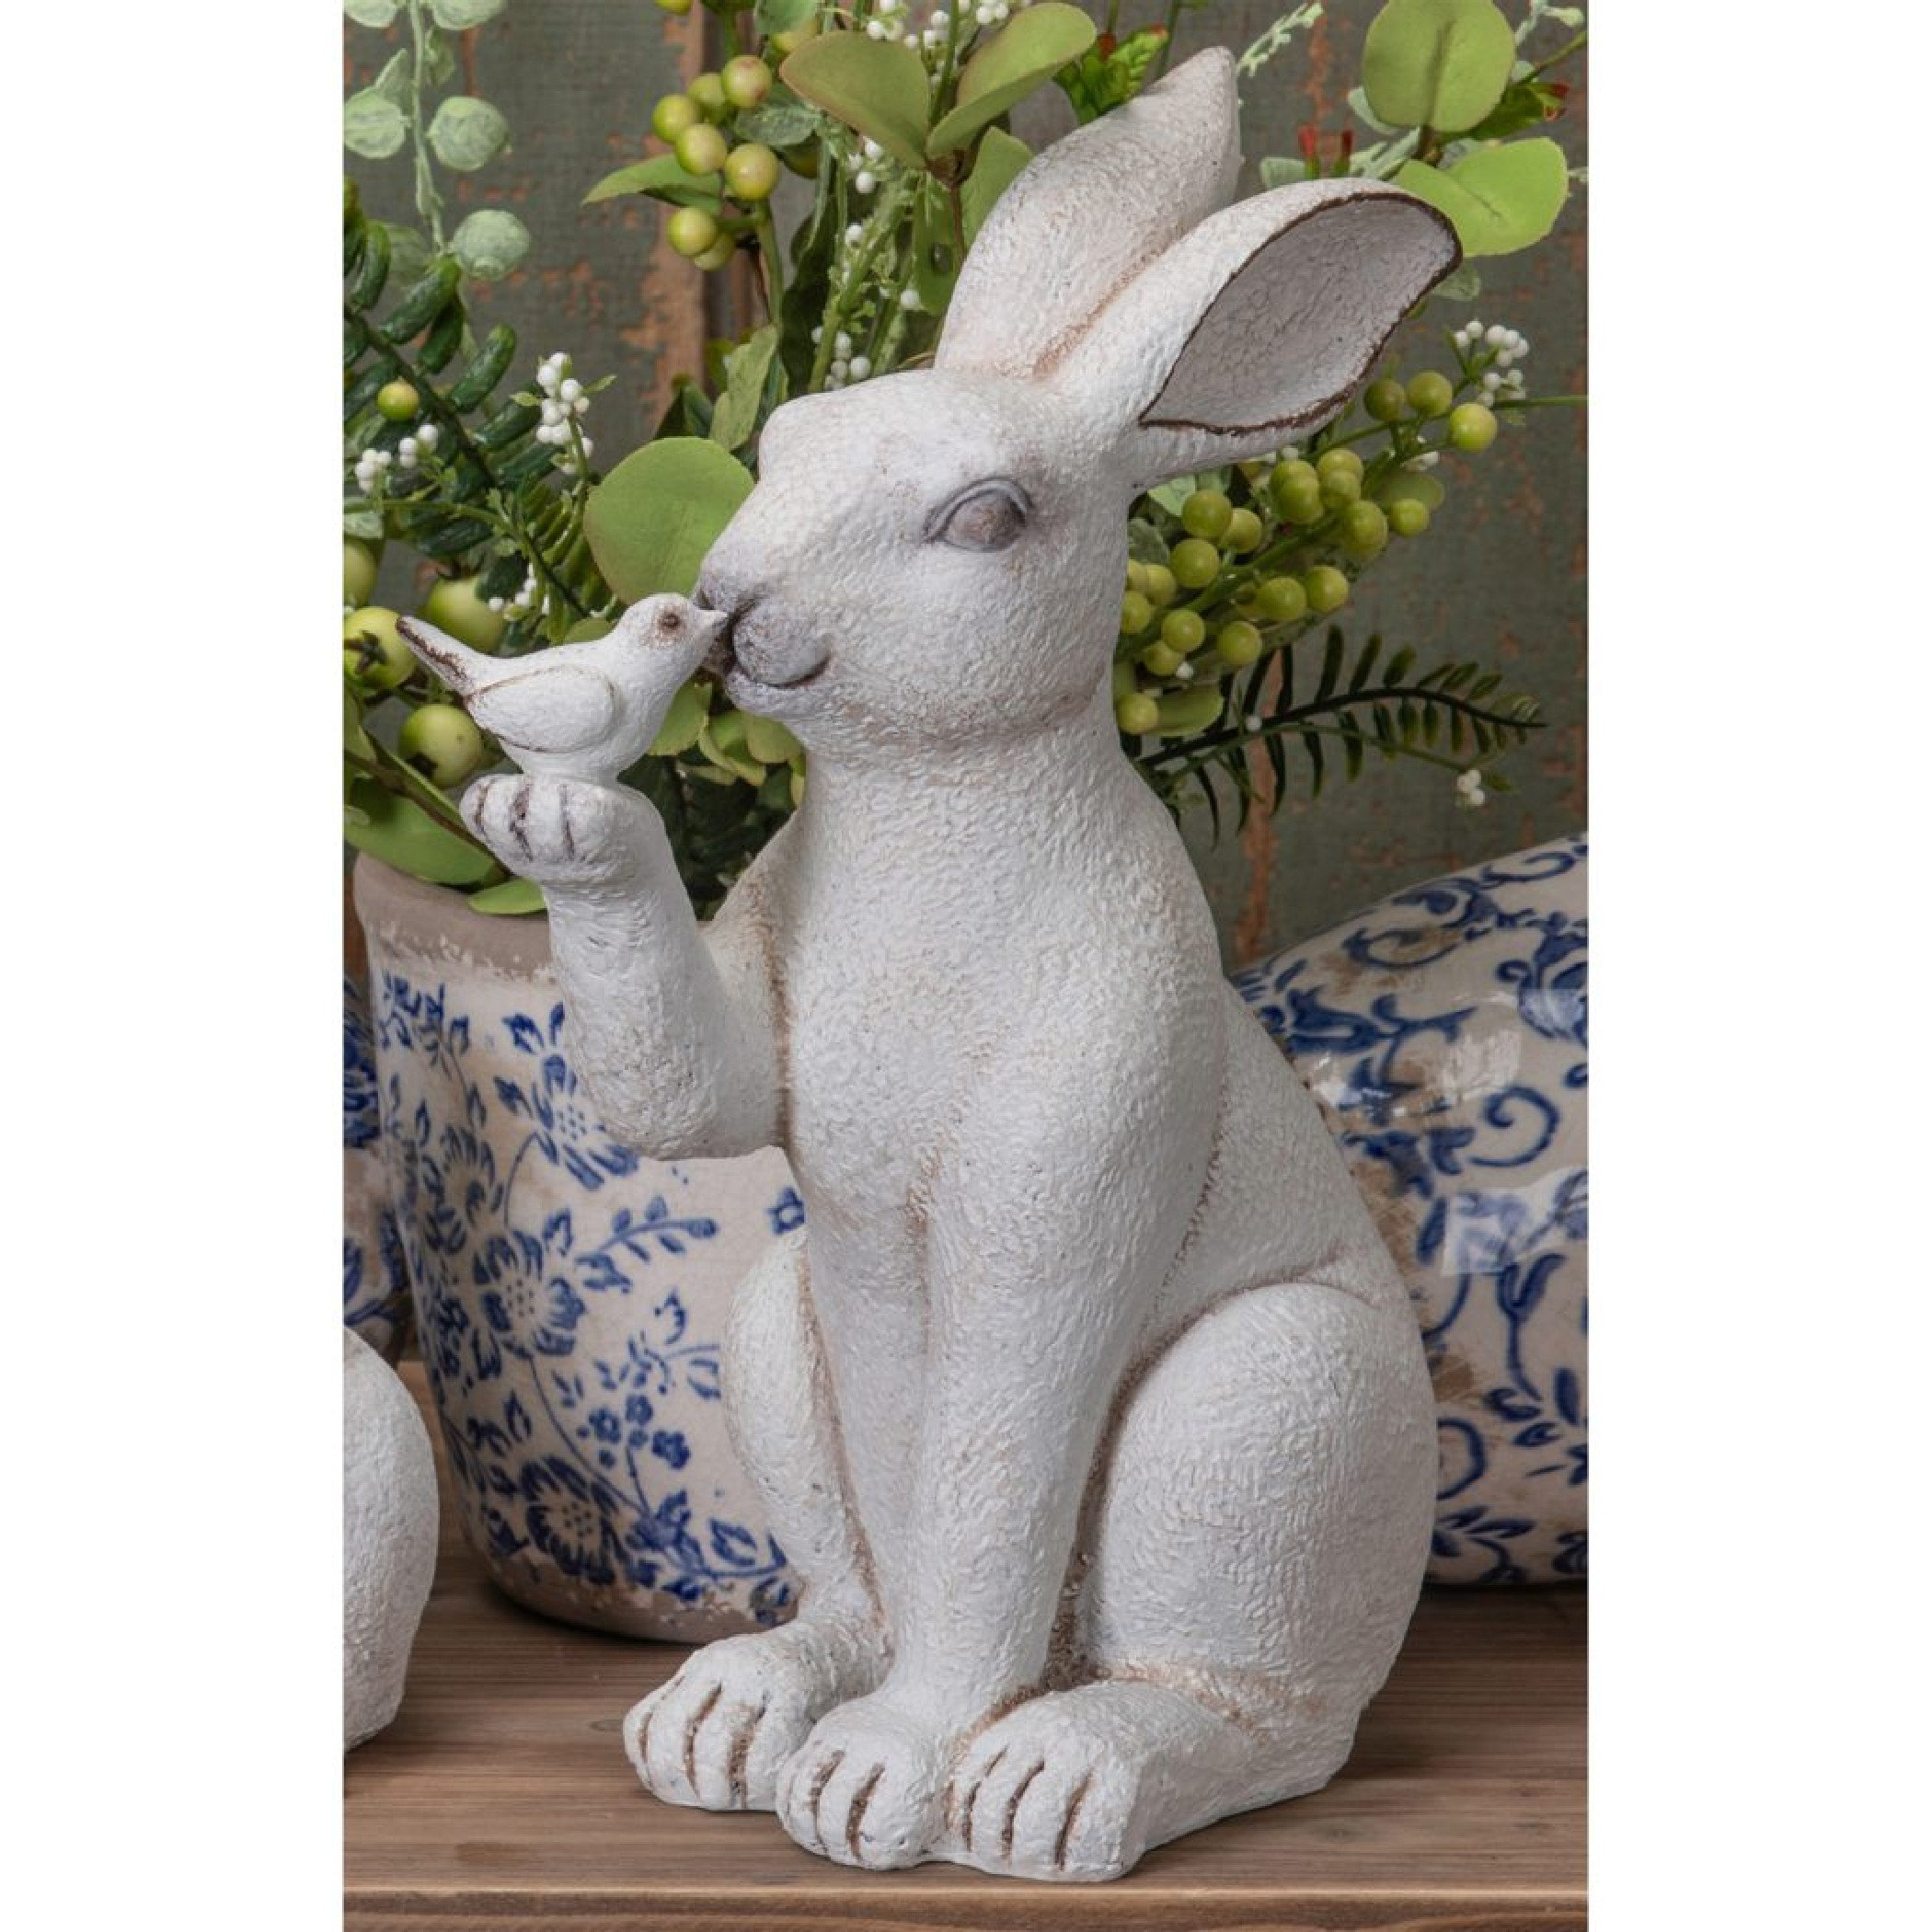 Small Resin Sitting Rabbit Bunny Figurine Statue Outdoor Lawn Decor White